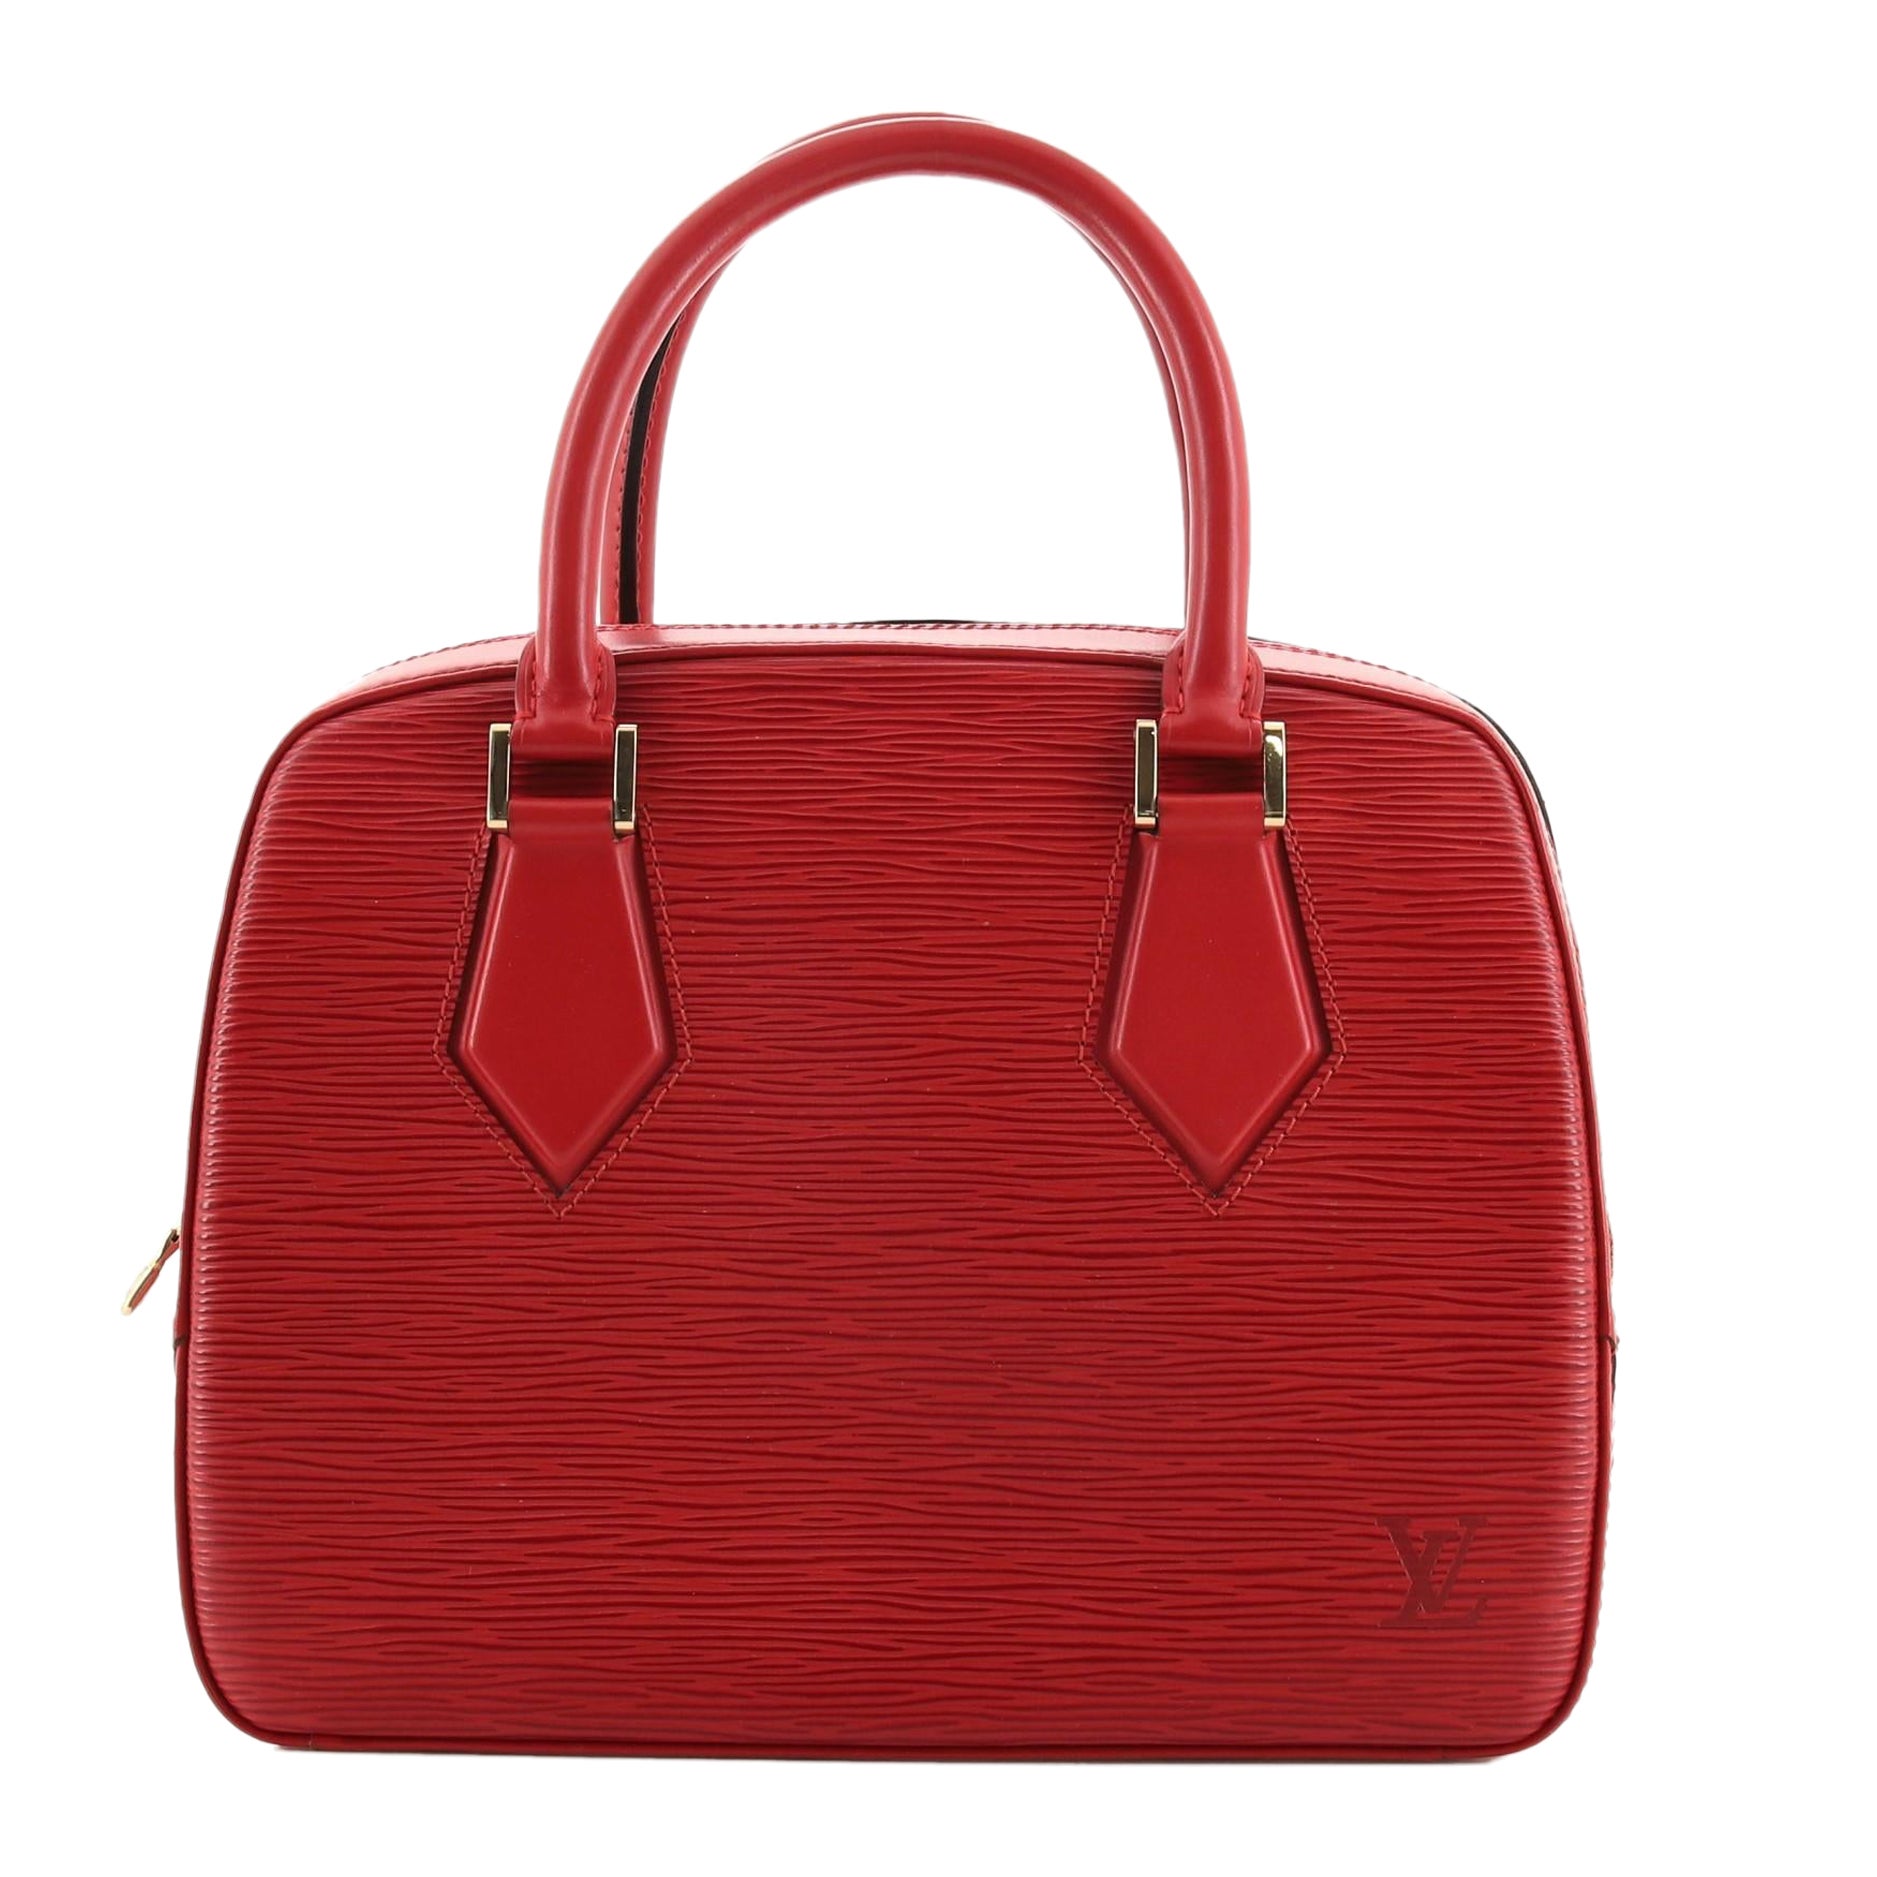 Louis Vuitton Sablons Handbag Epi Leather